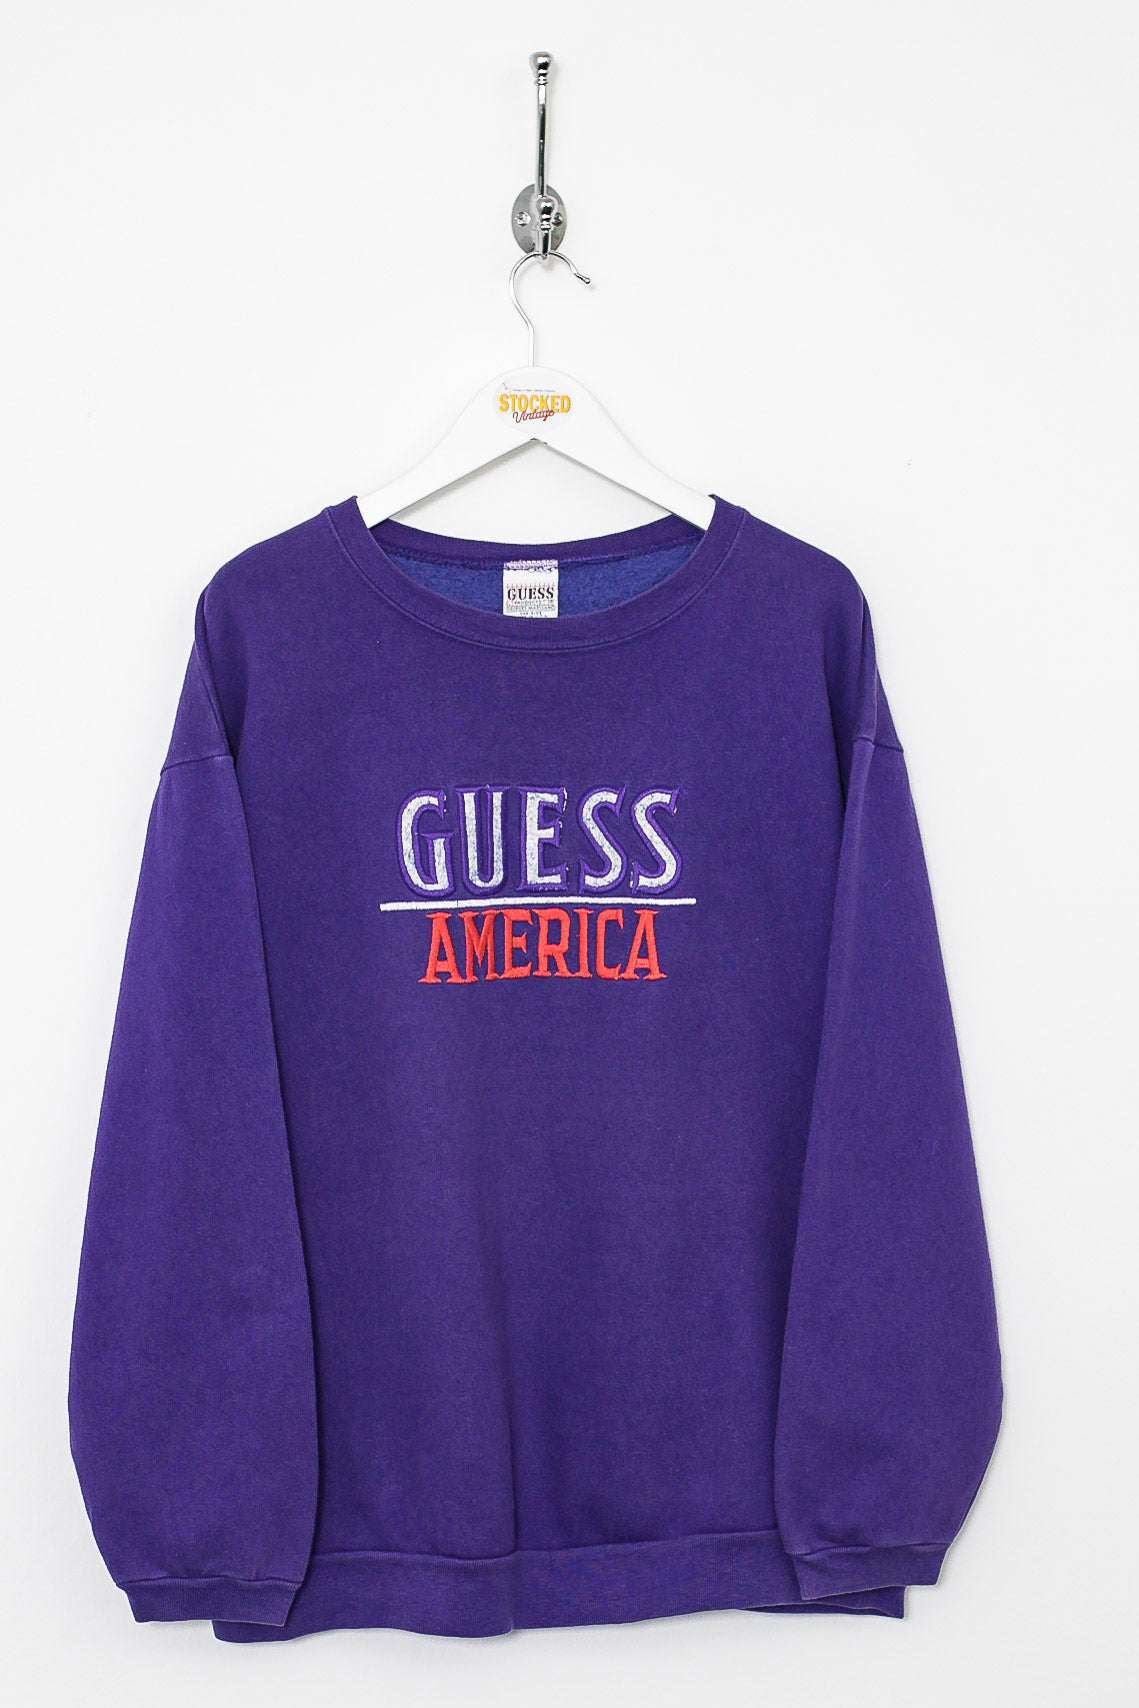 90s Guess Sweatshirt (M)